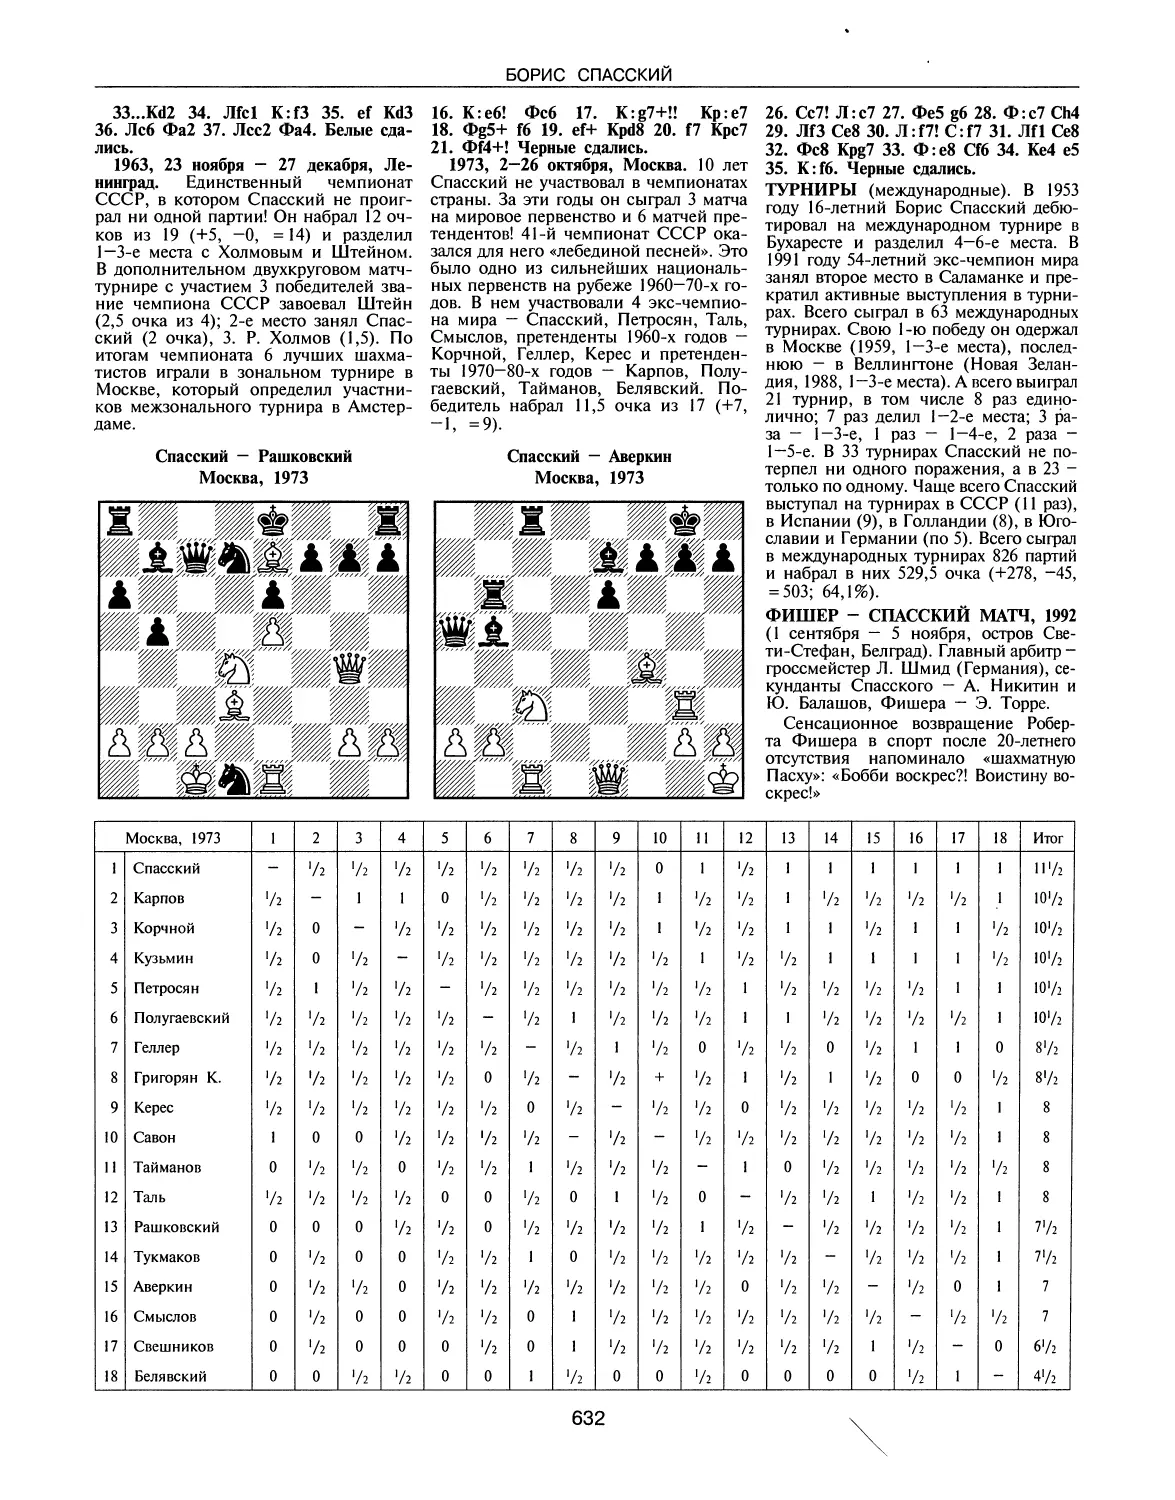 Турниры
Фишер — Спасский матч, 1992